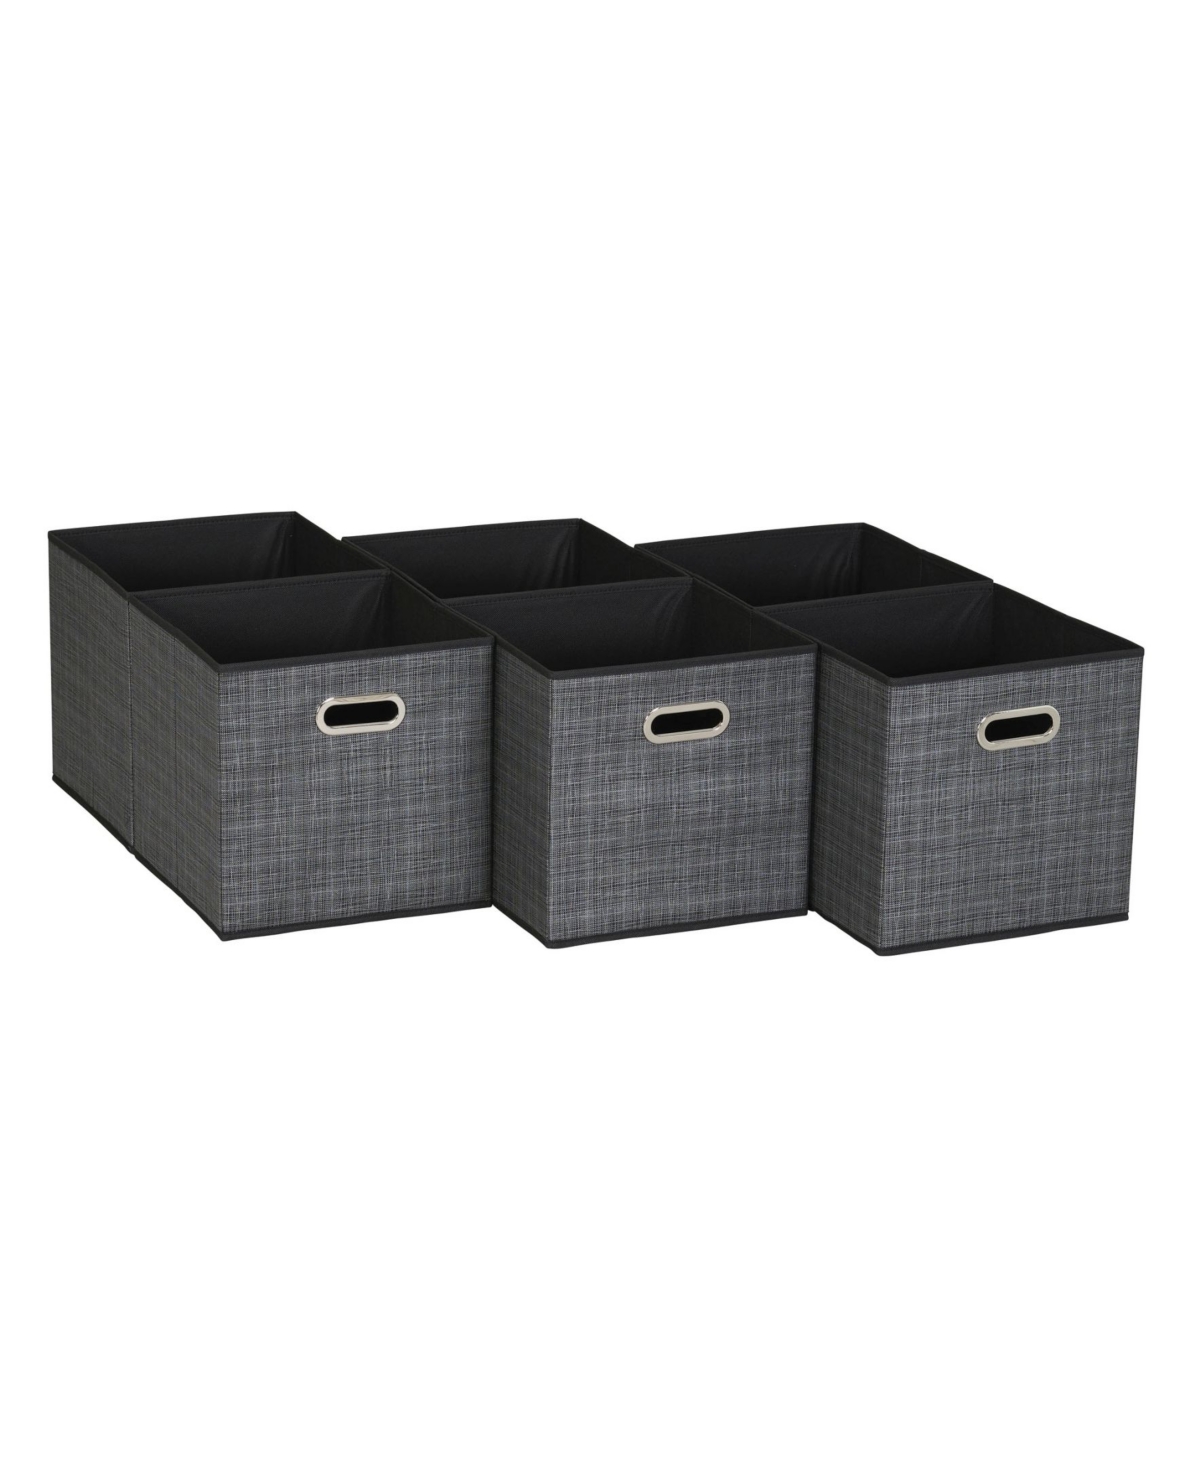 Fabric Cube Storage Bins Set, 6 Piece - Tan